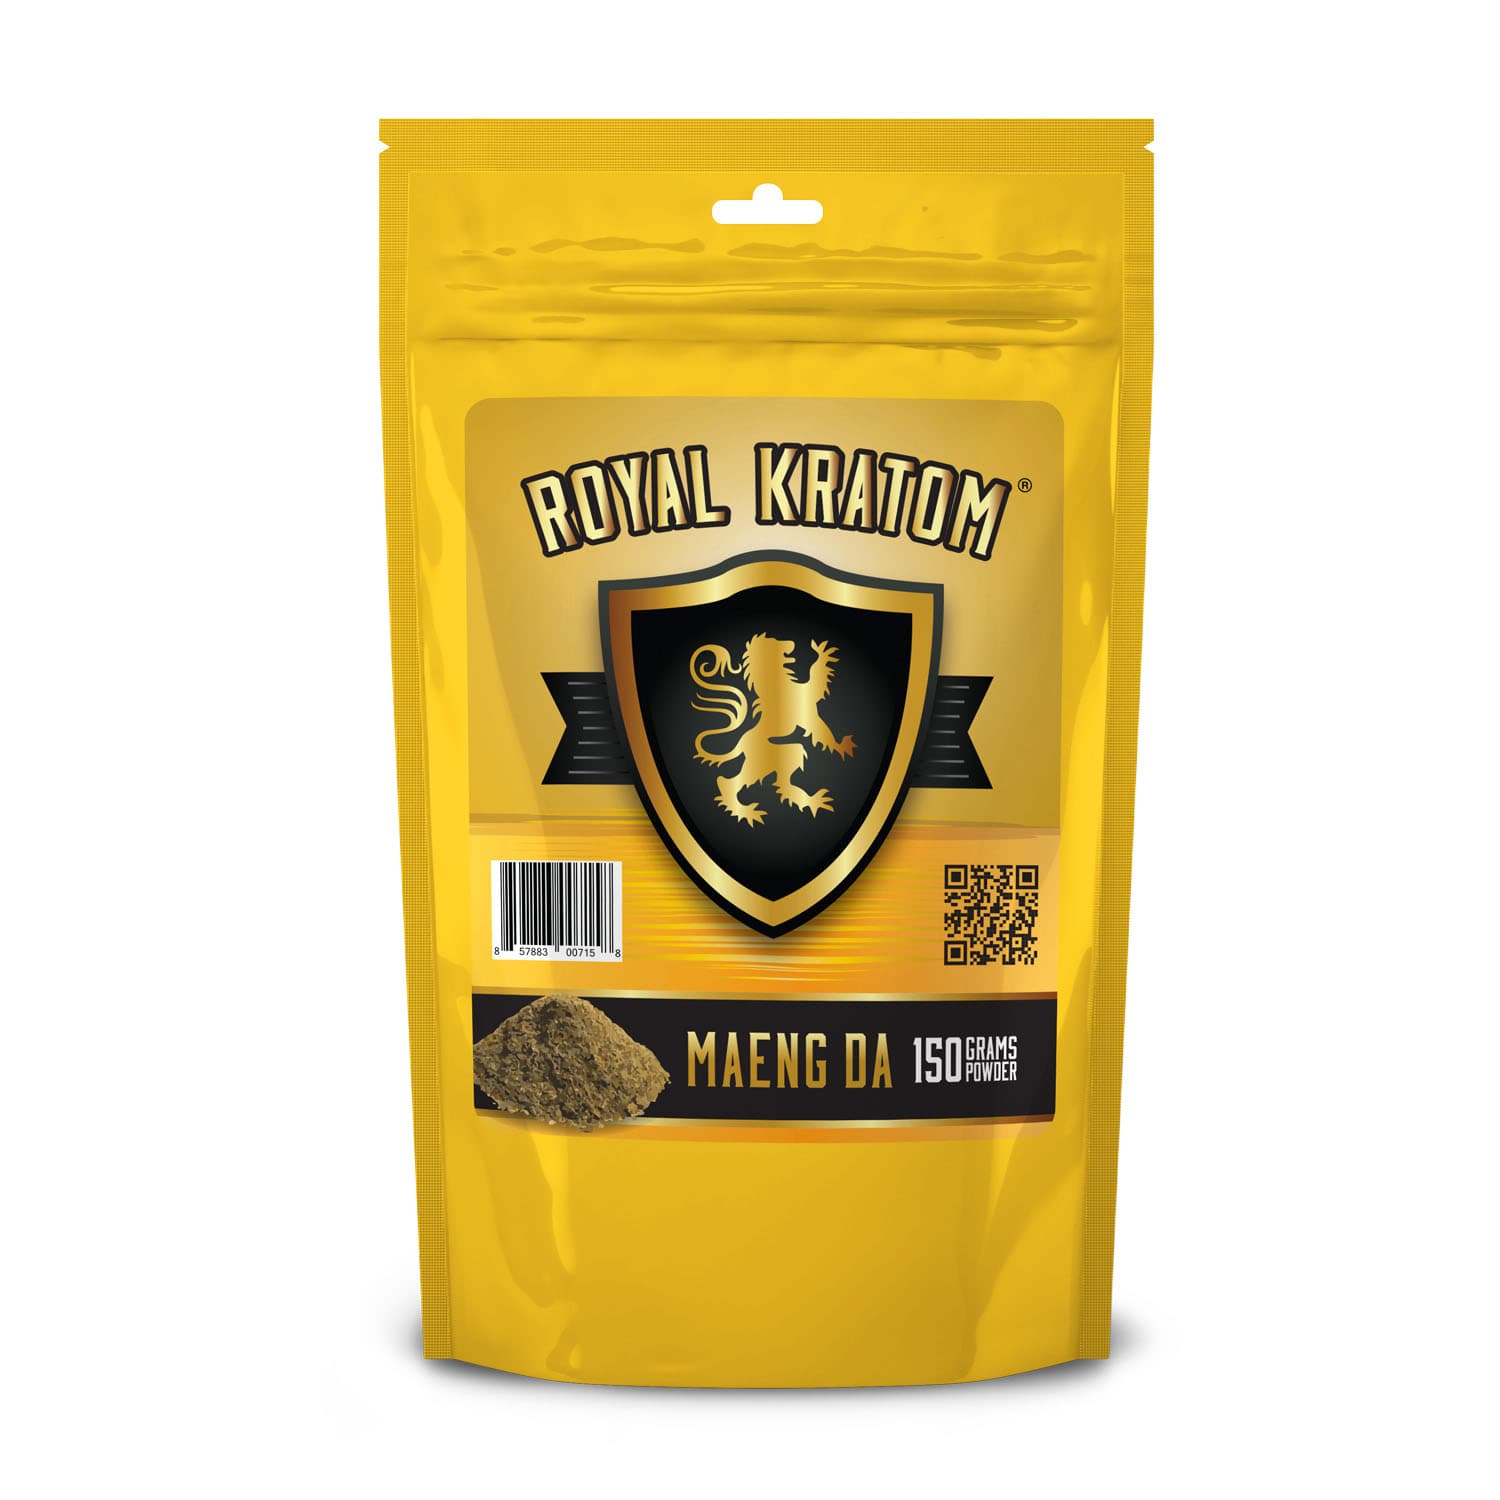 Royal Kratom Maeng Da Kratom Powder 150 Grams package